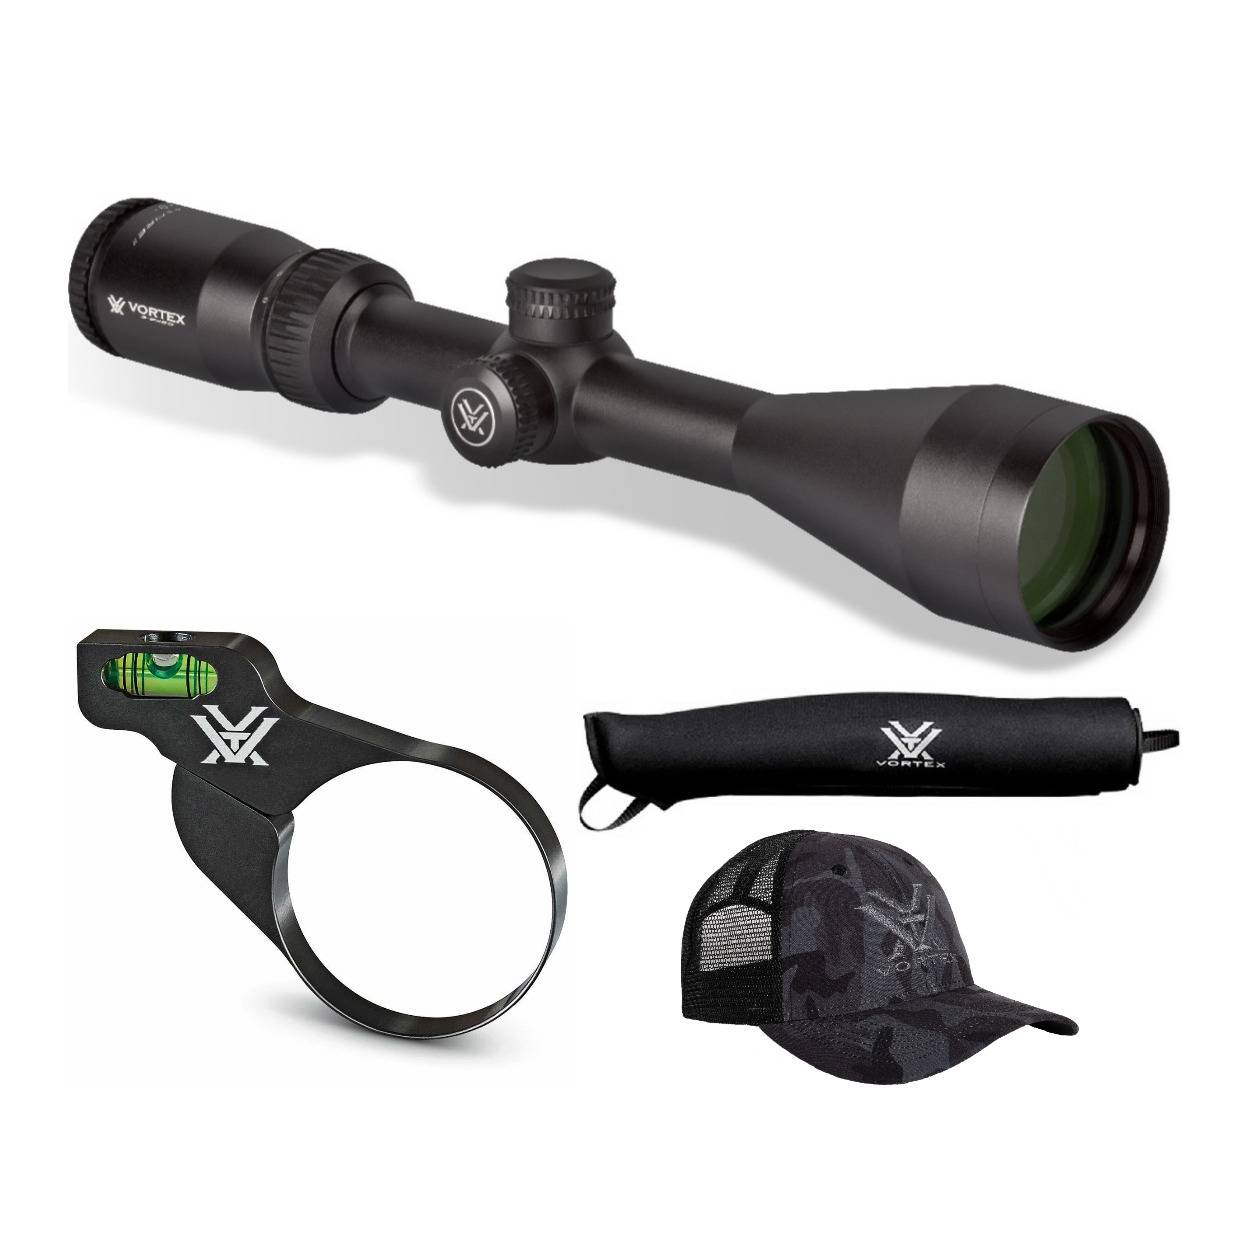 Vortex Crossfire II 2-7x32 Rimfire Riflescope (V-Plex MOA Reticle) Hunting Outfit